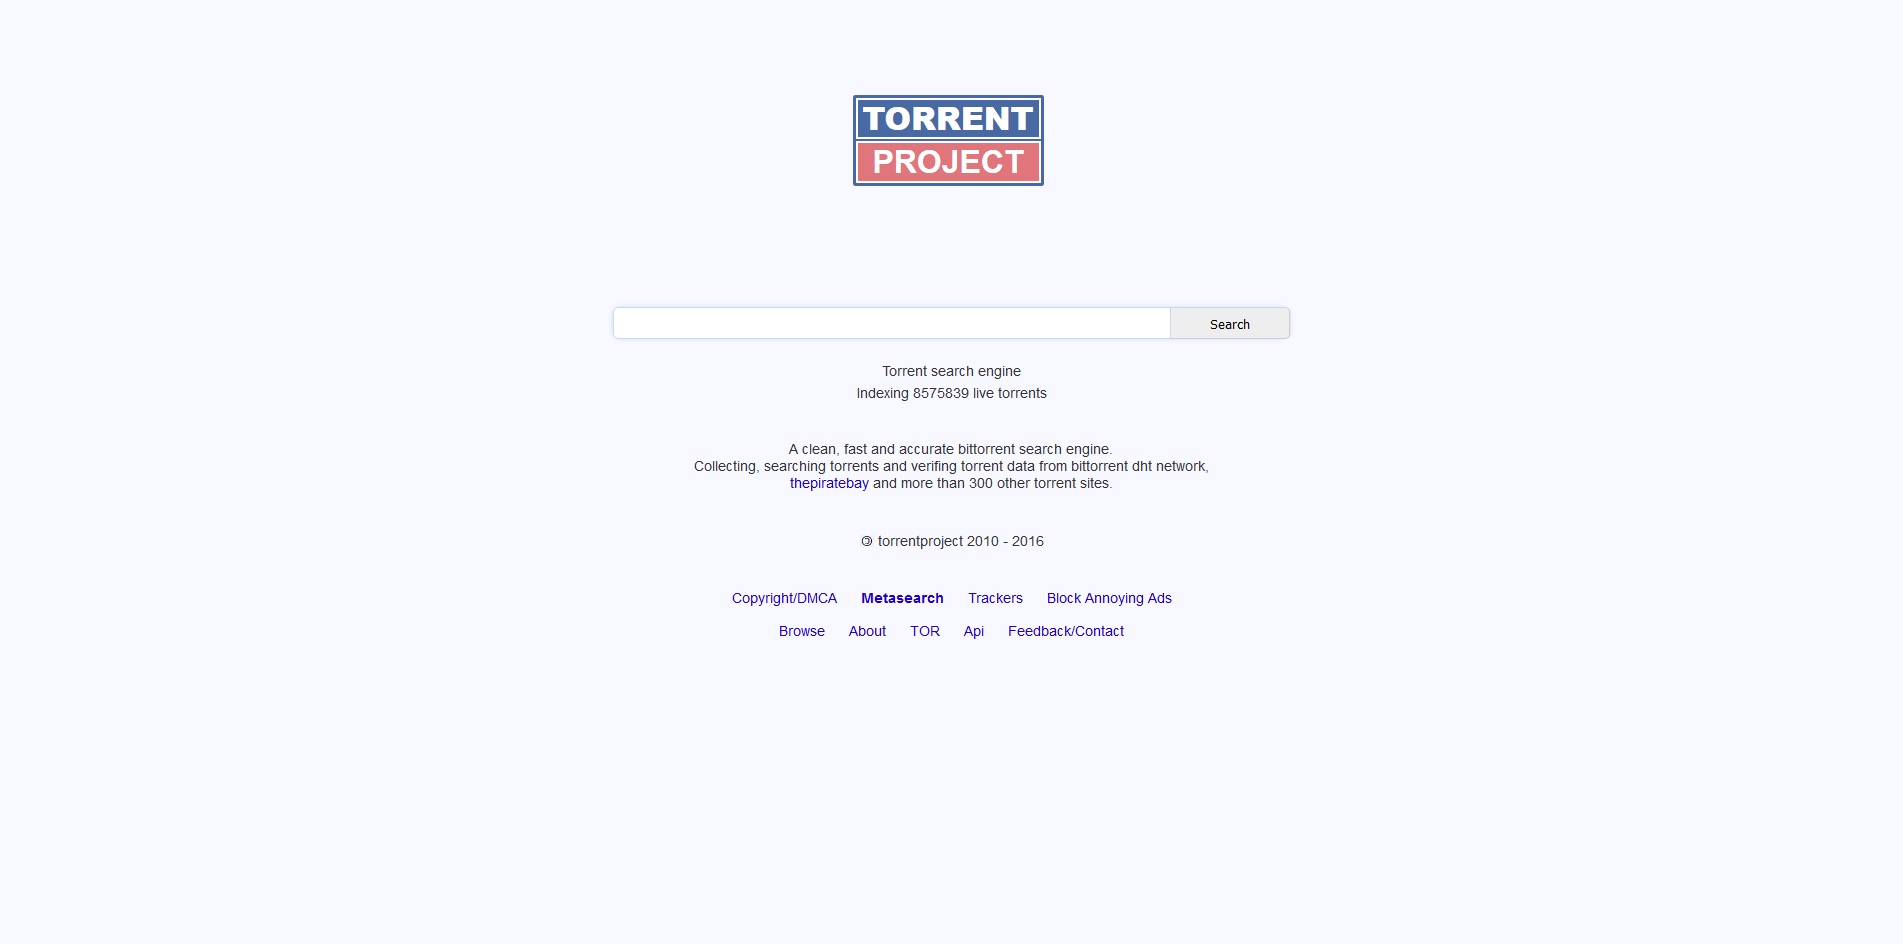 Torrent Project